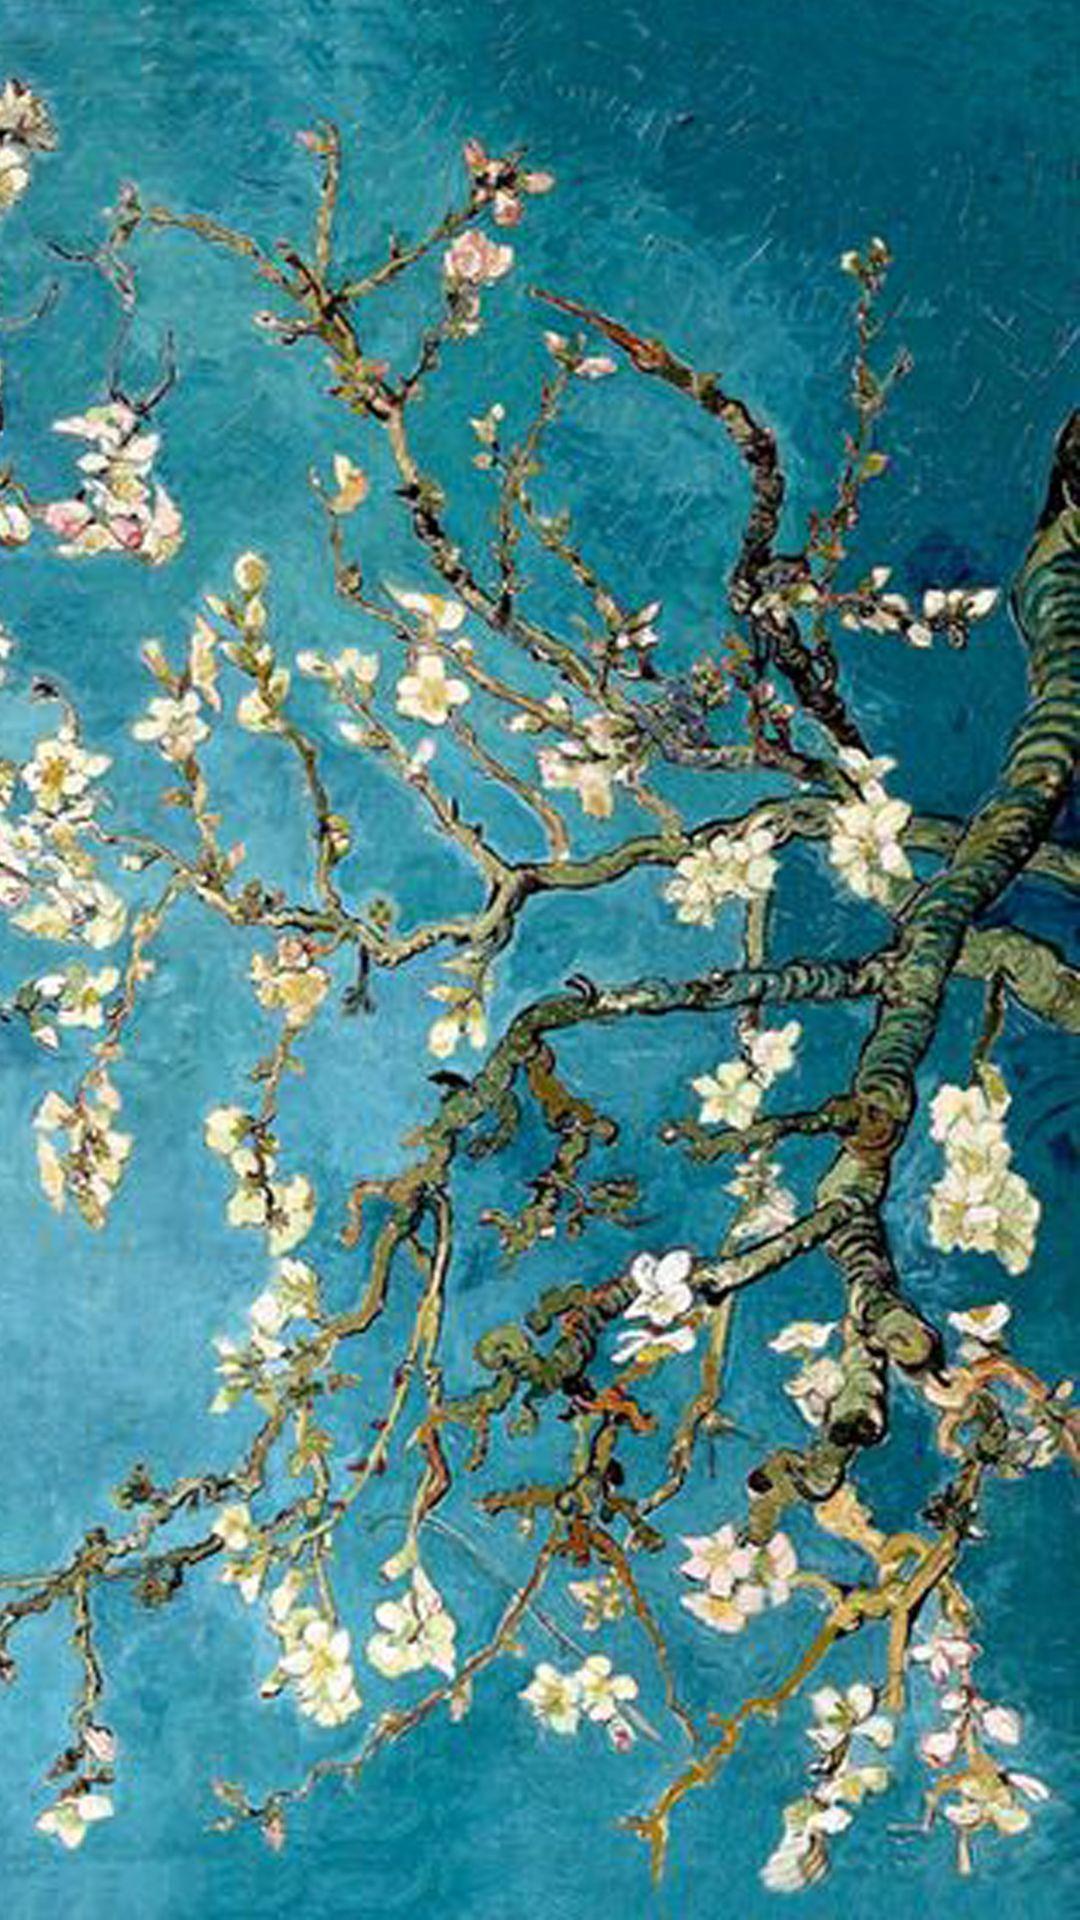 HD wallpaper Vincent van Gogh self portraits oil painting creativity   Wallpaper Flare